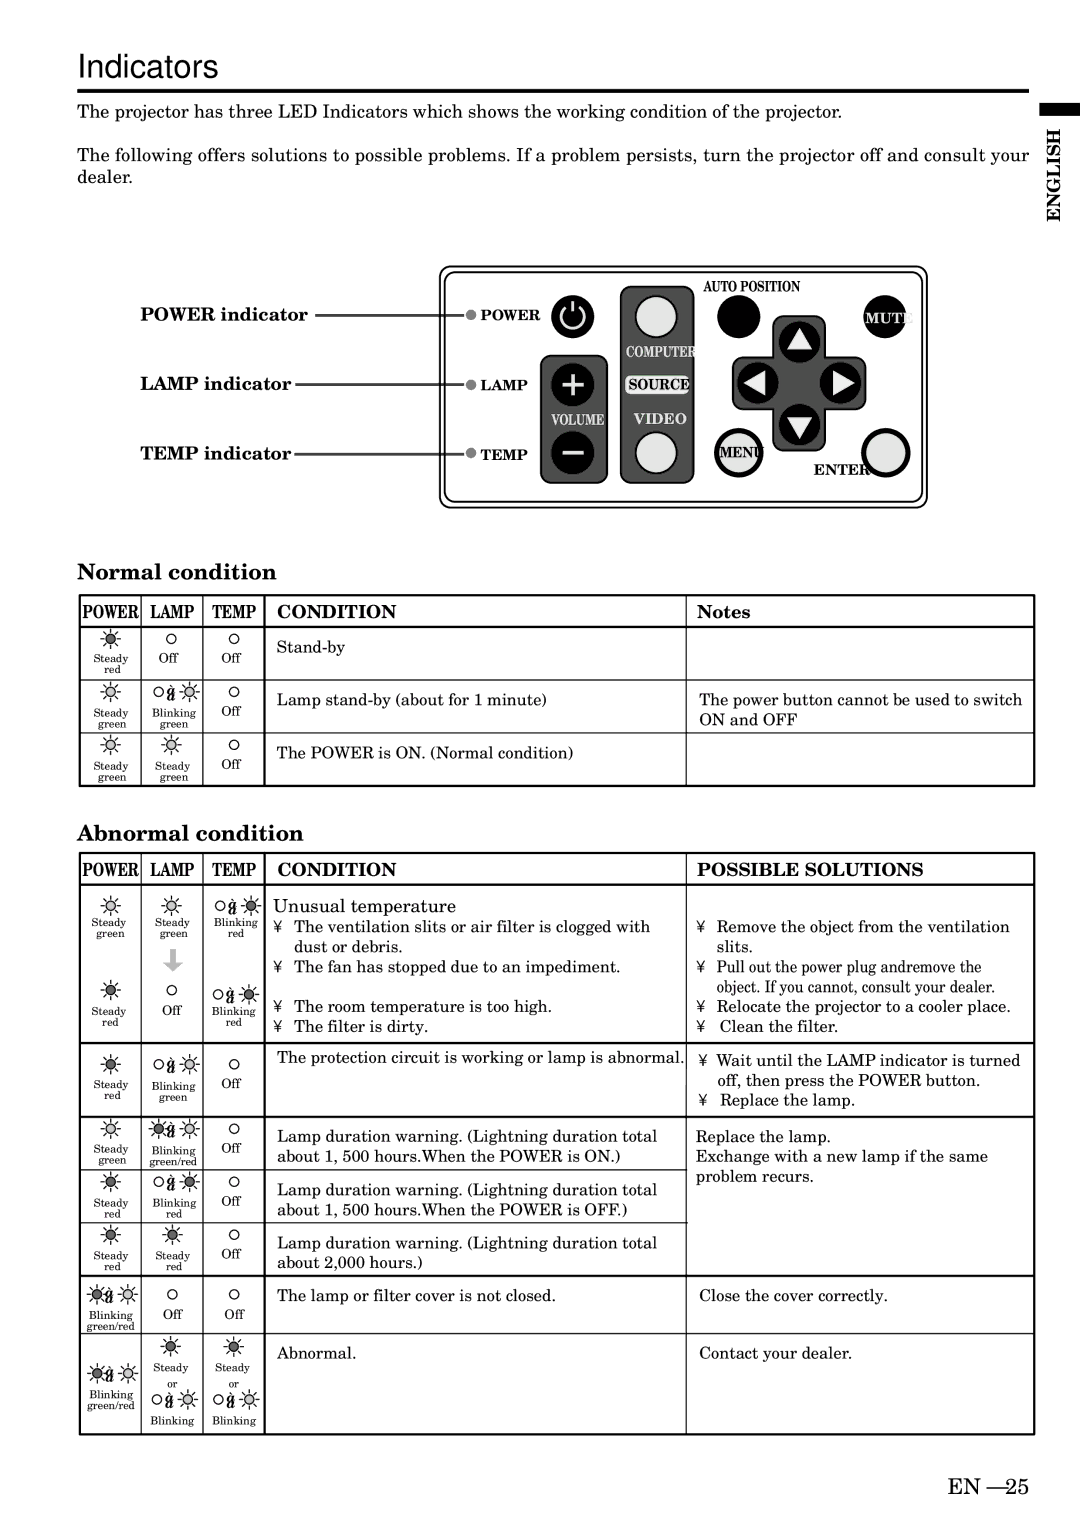 Mitsubishi Electronics SA51 user manual Indicators, Normal condition, Abnormal condition 